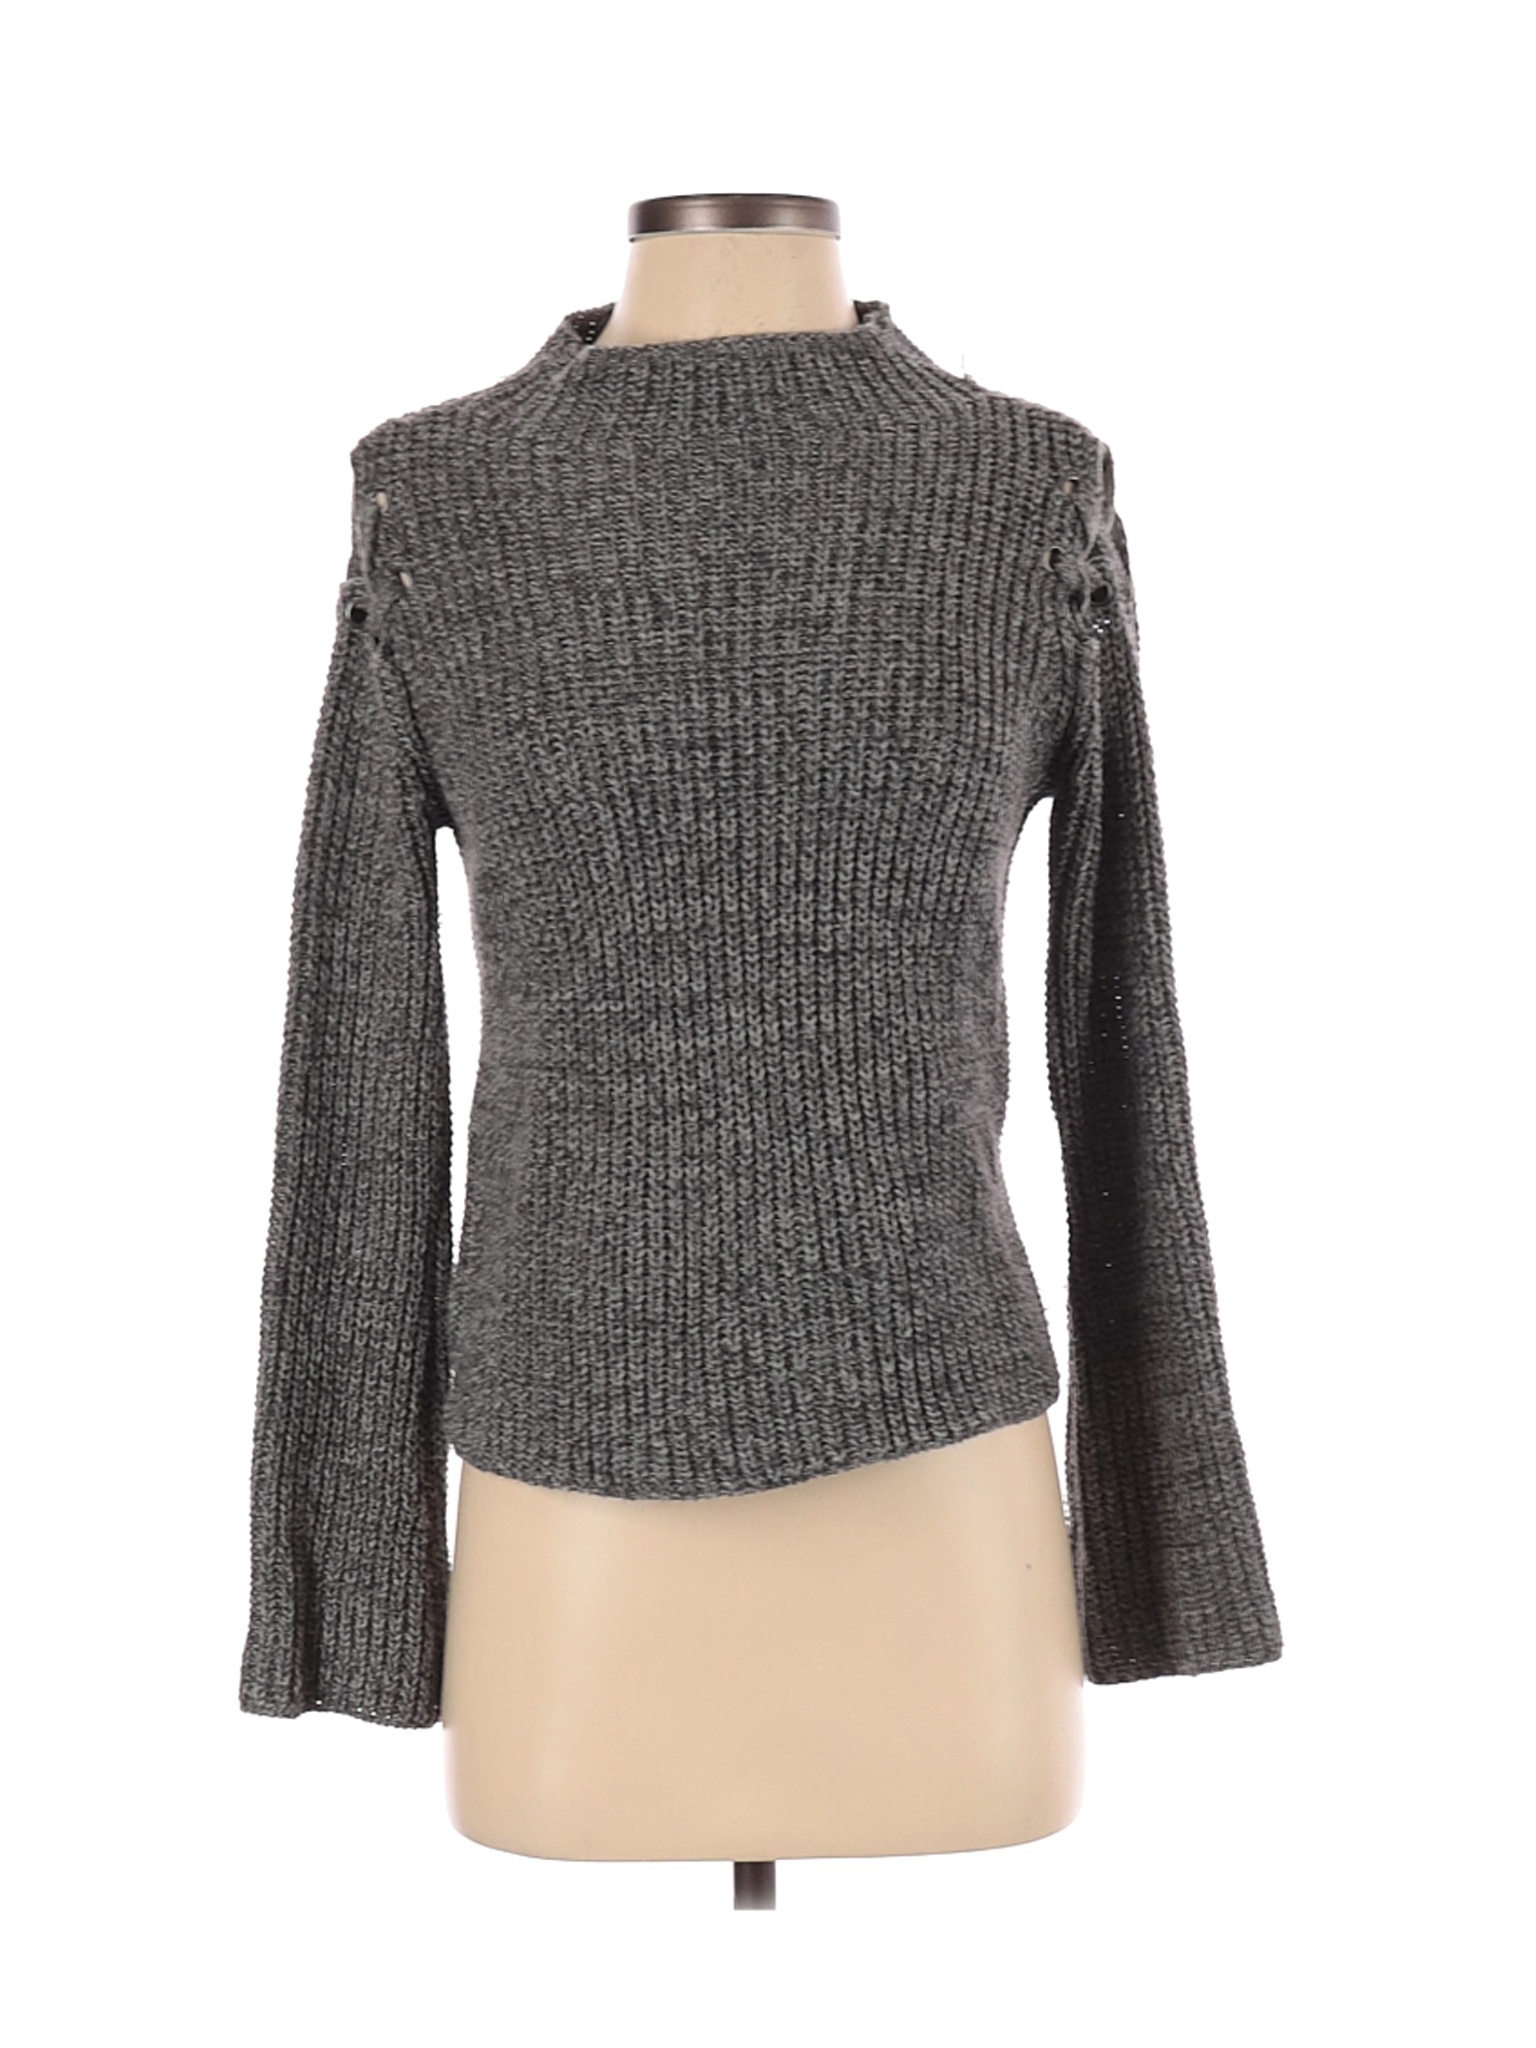 John & Jenn Women Gray Turtleneck Sweater XS | eBay